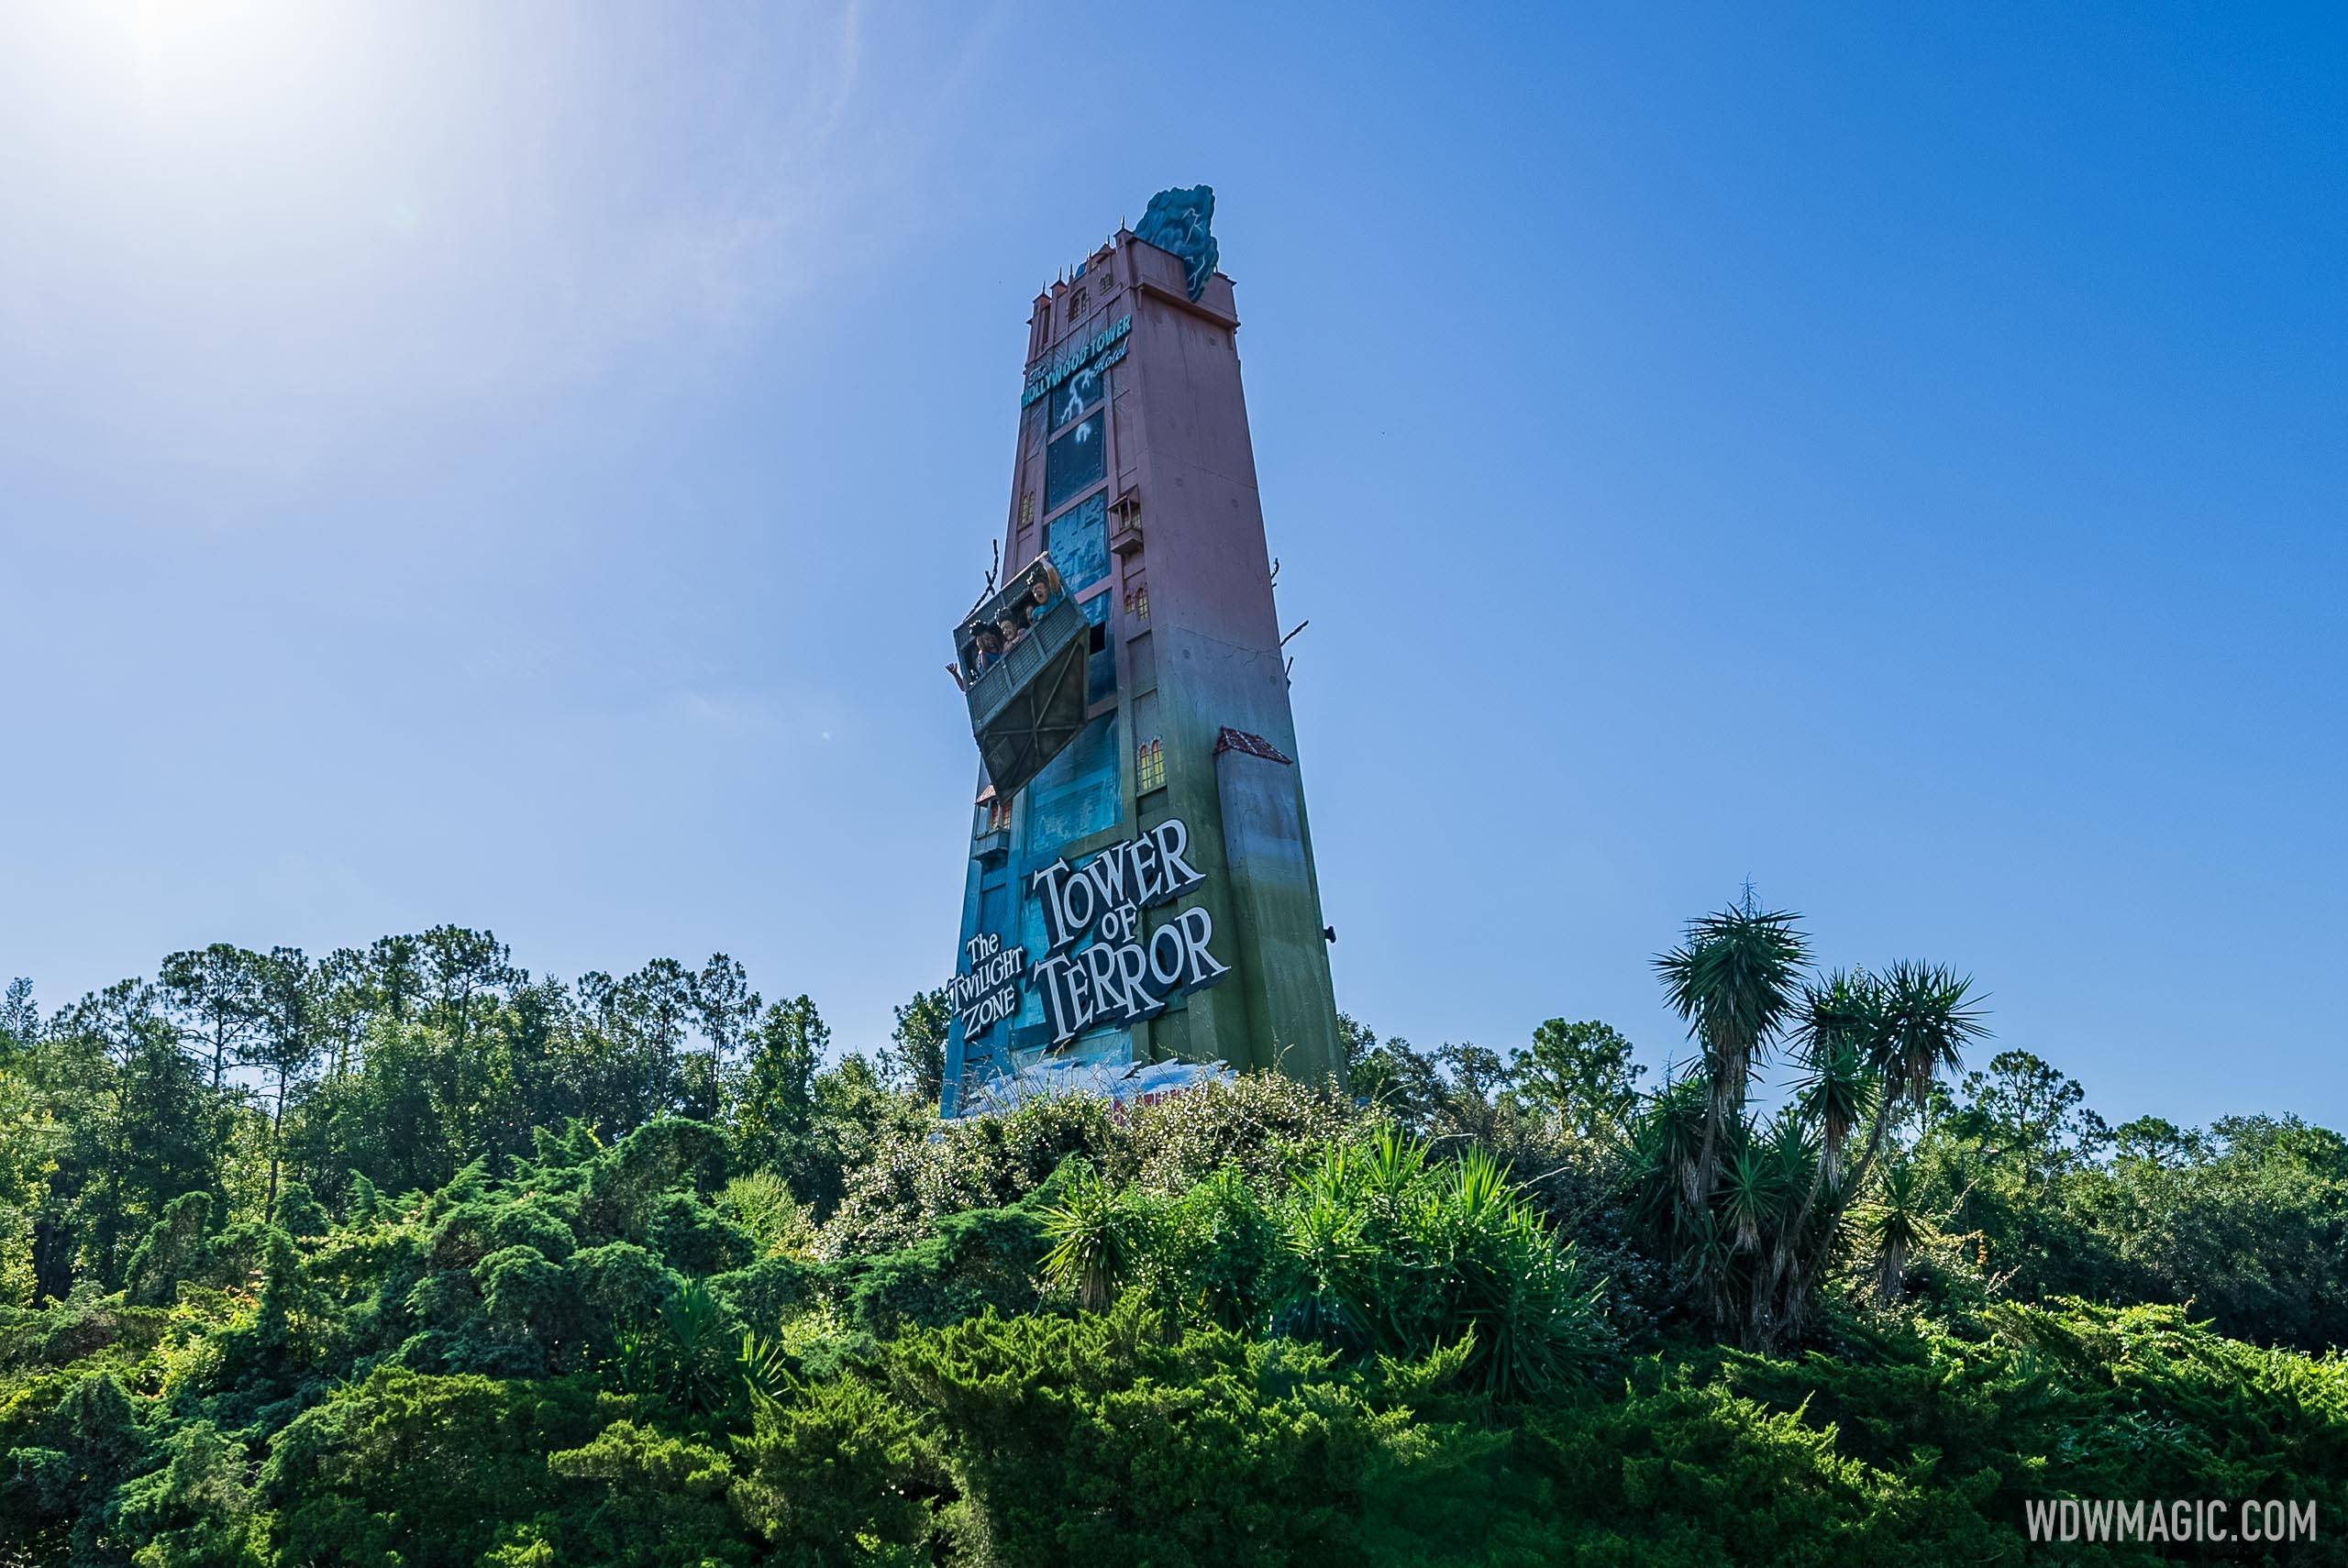 Tower of Terror billboard demolition - July 13 2022